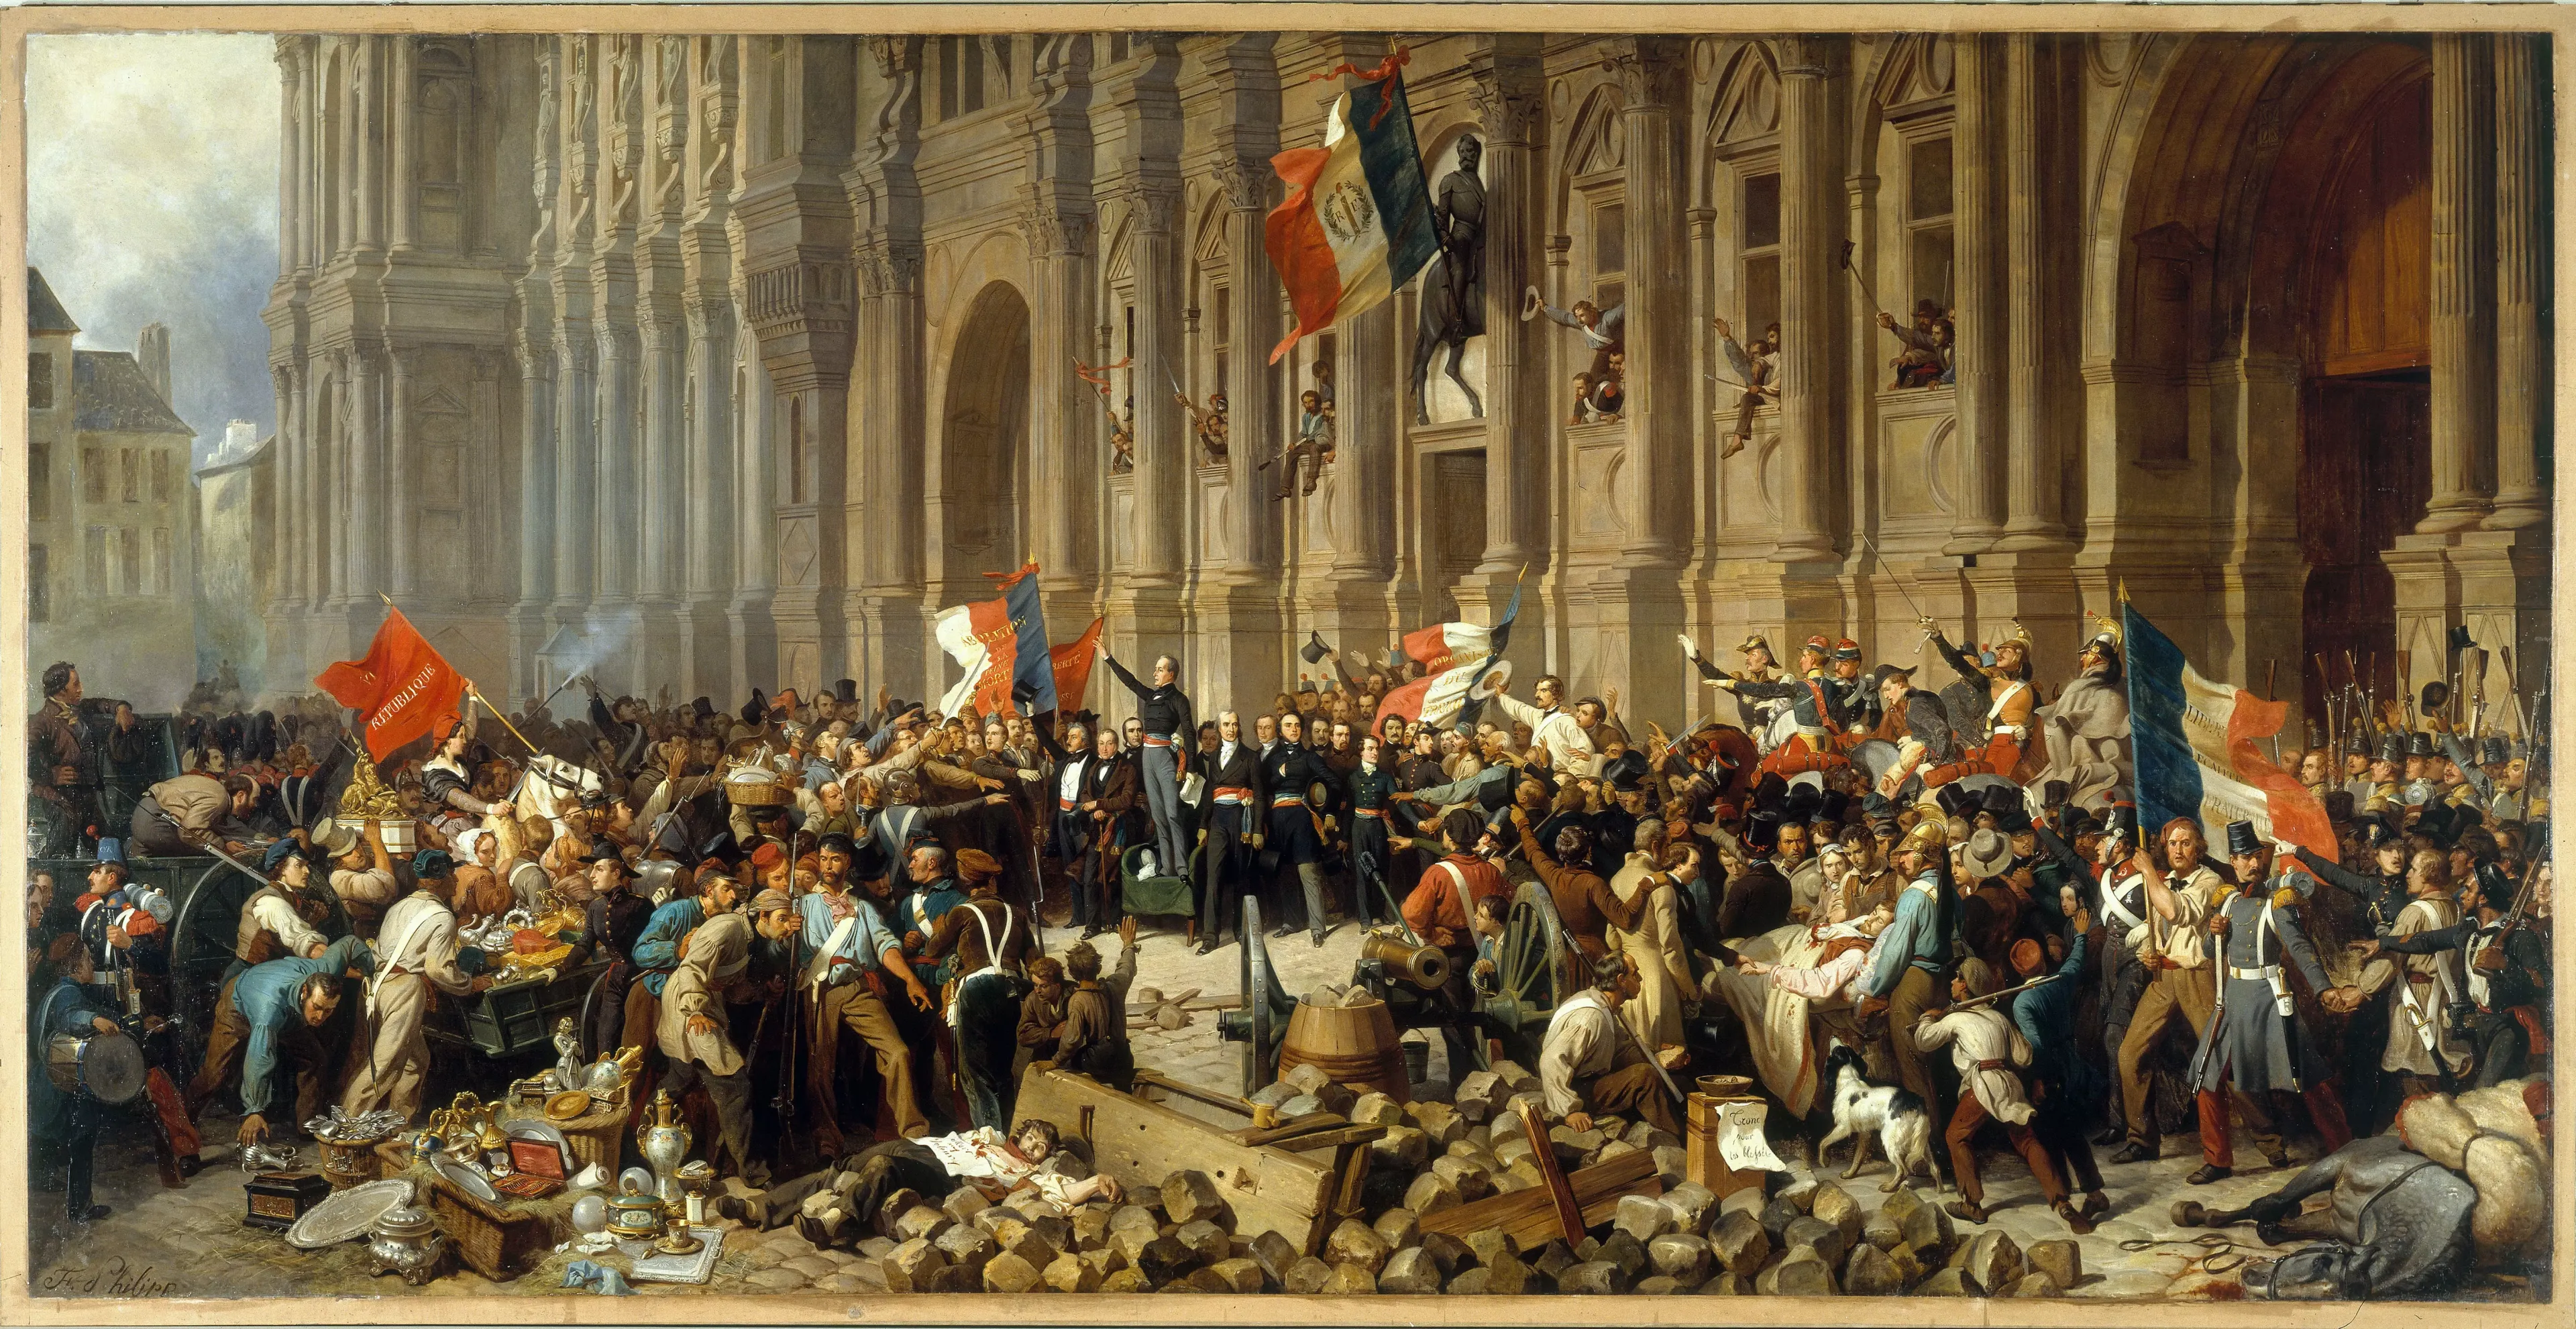 3 революции xix в. Великая французская революция 1848-1849. Великая французская революция 1789-1792. Французская революция 1789 Наполеон Бонапарт.